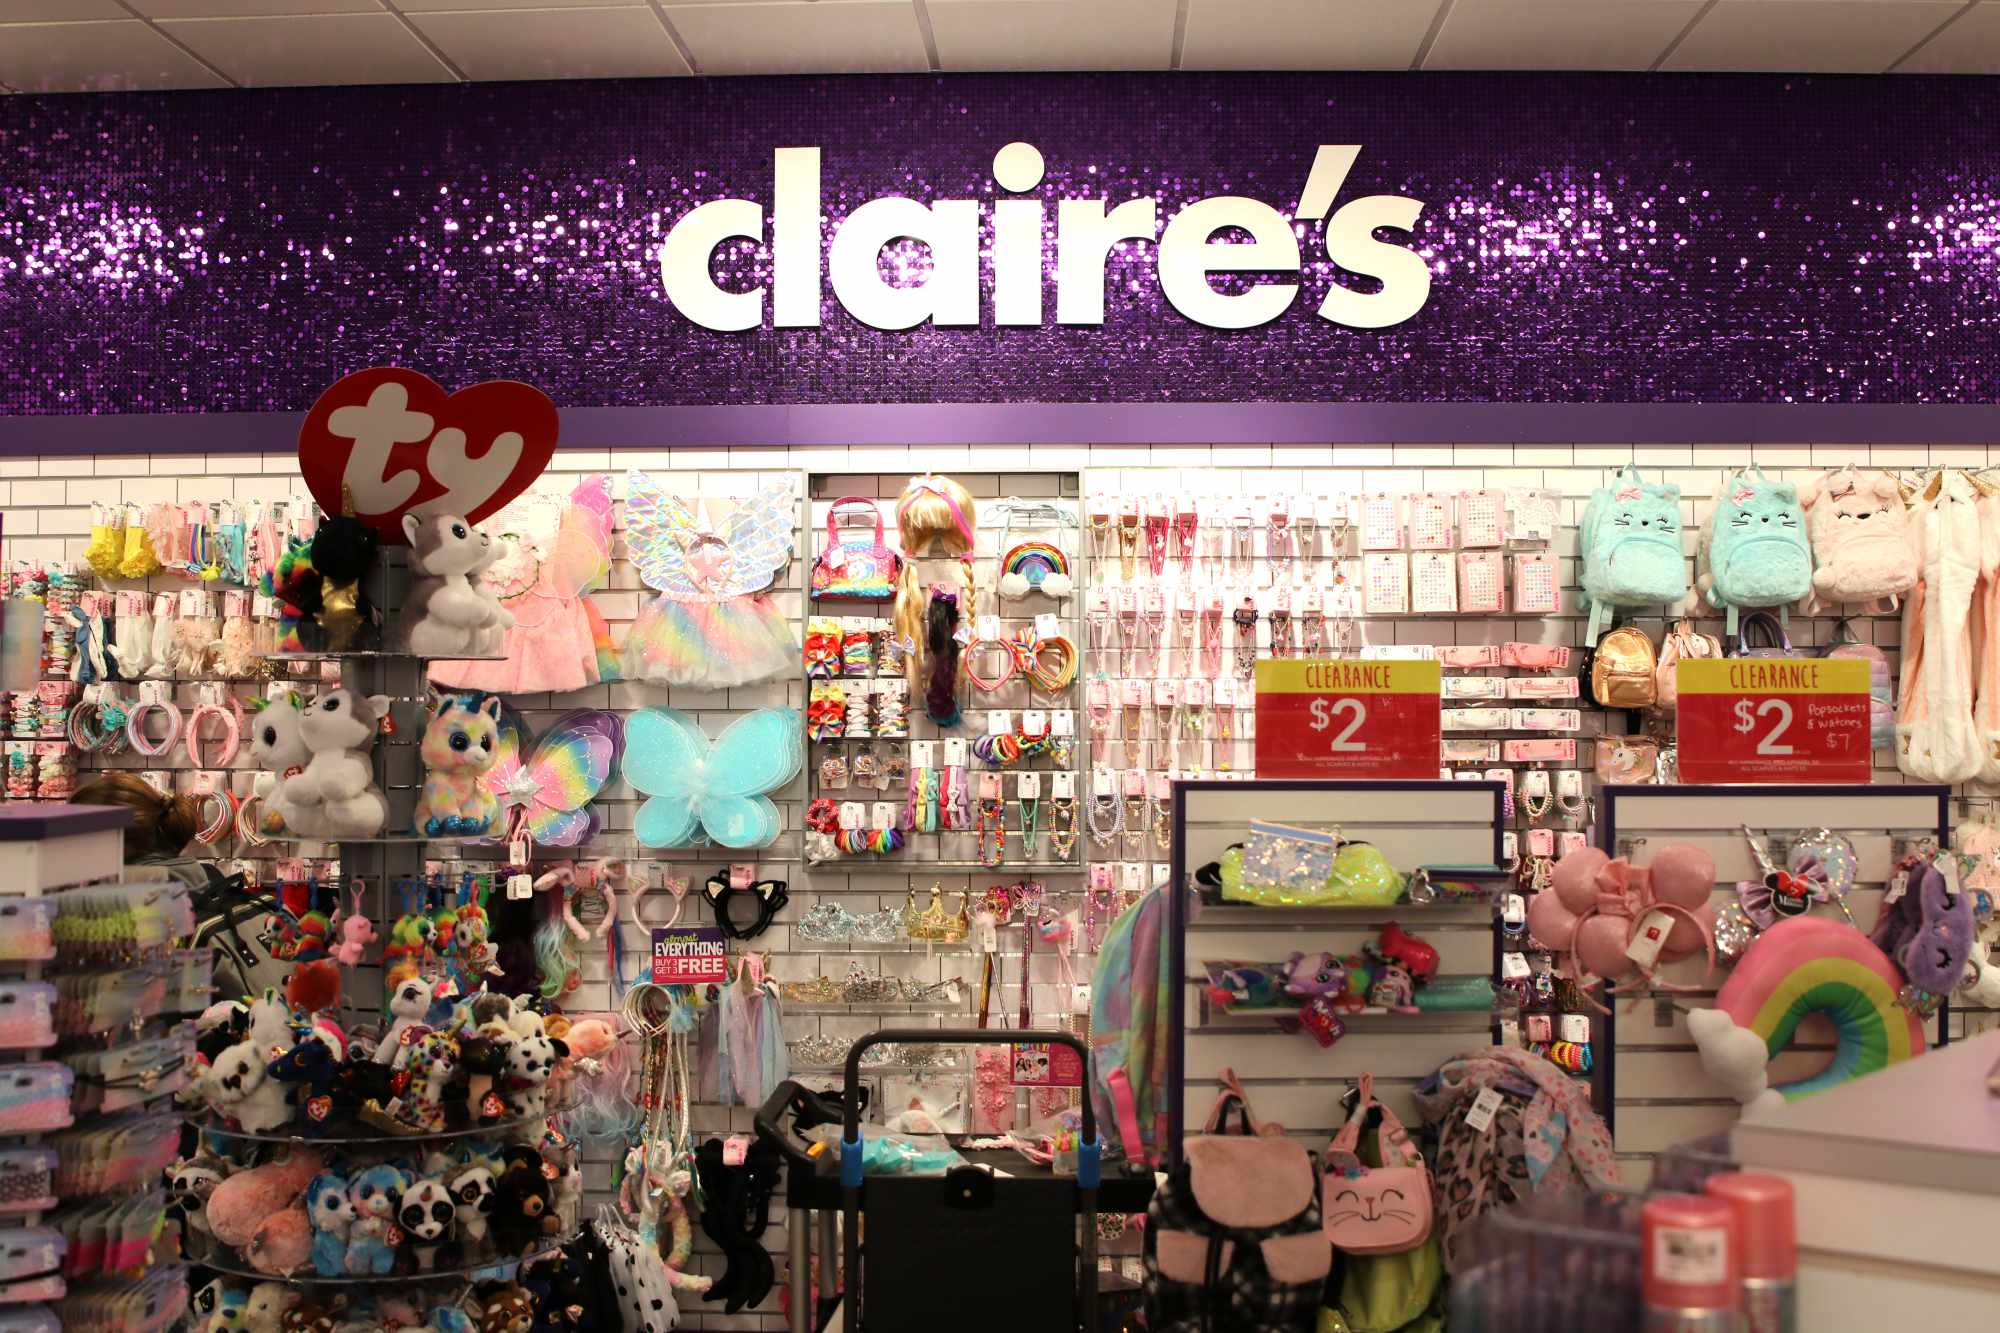 Claire's Accessories Store